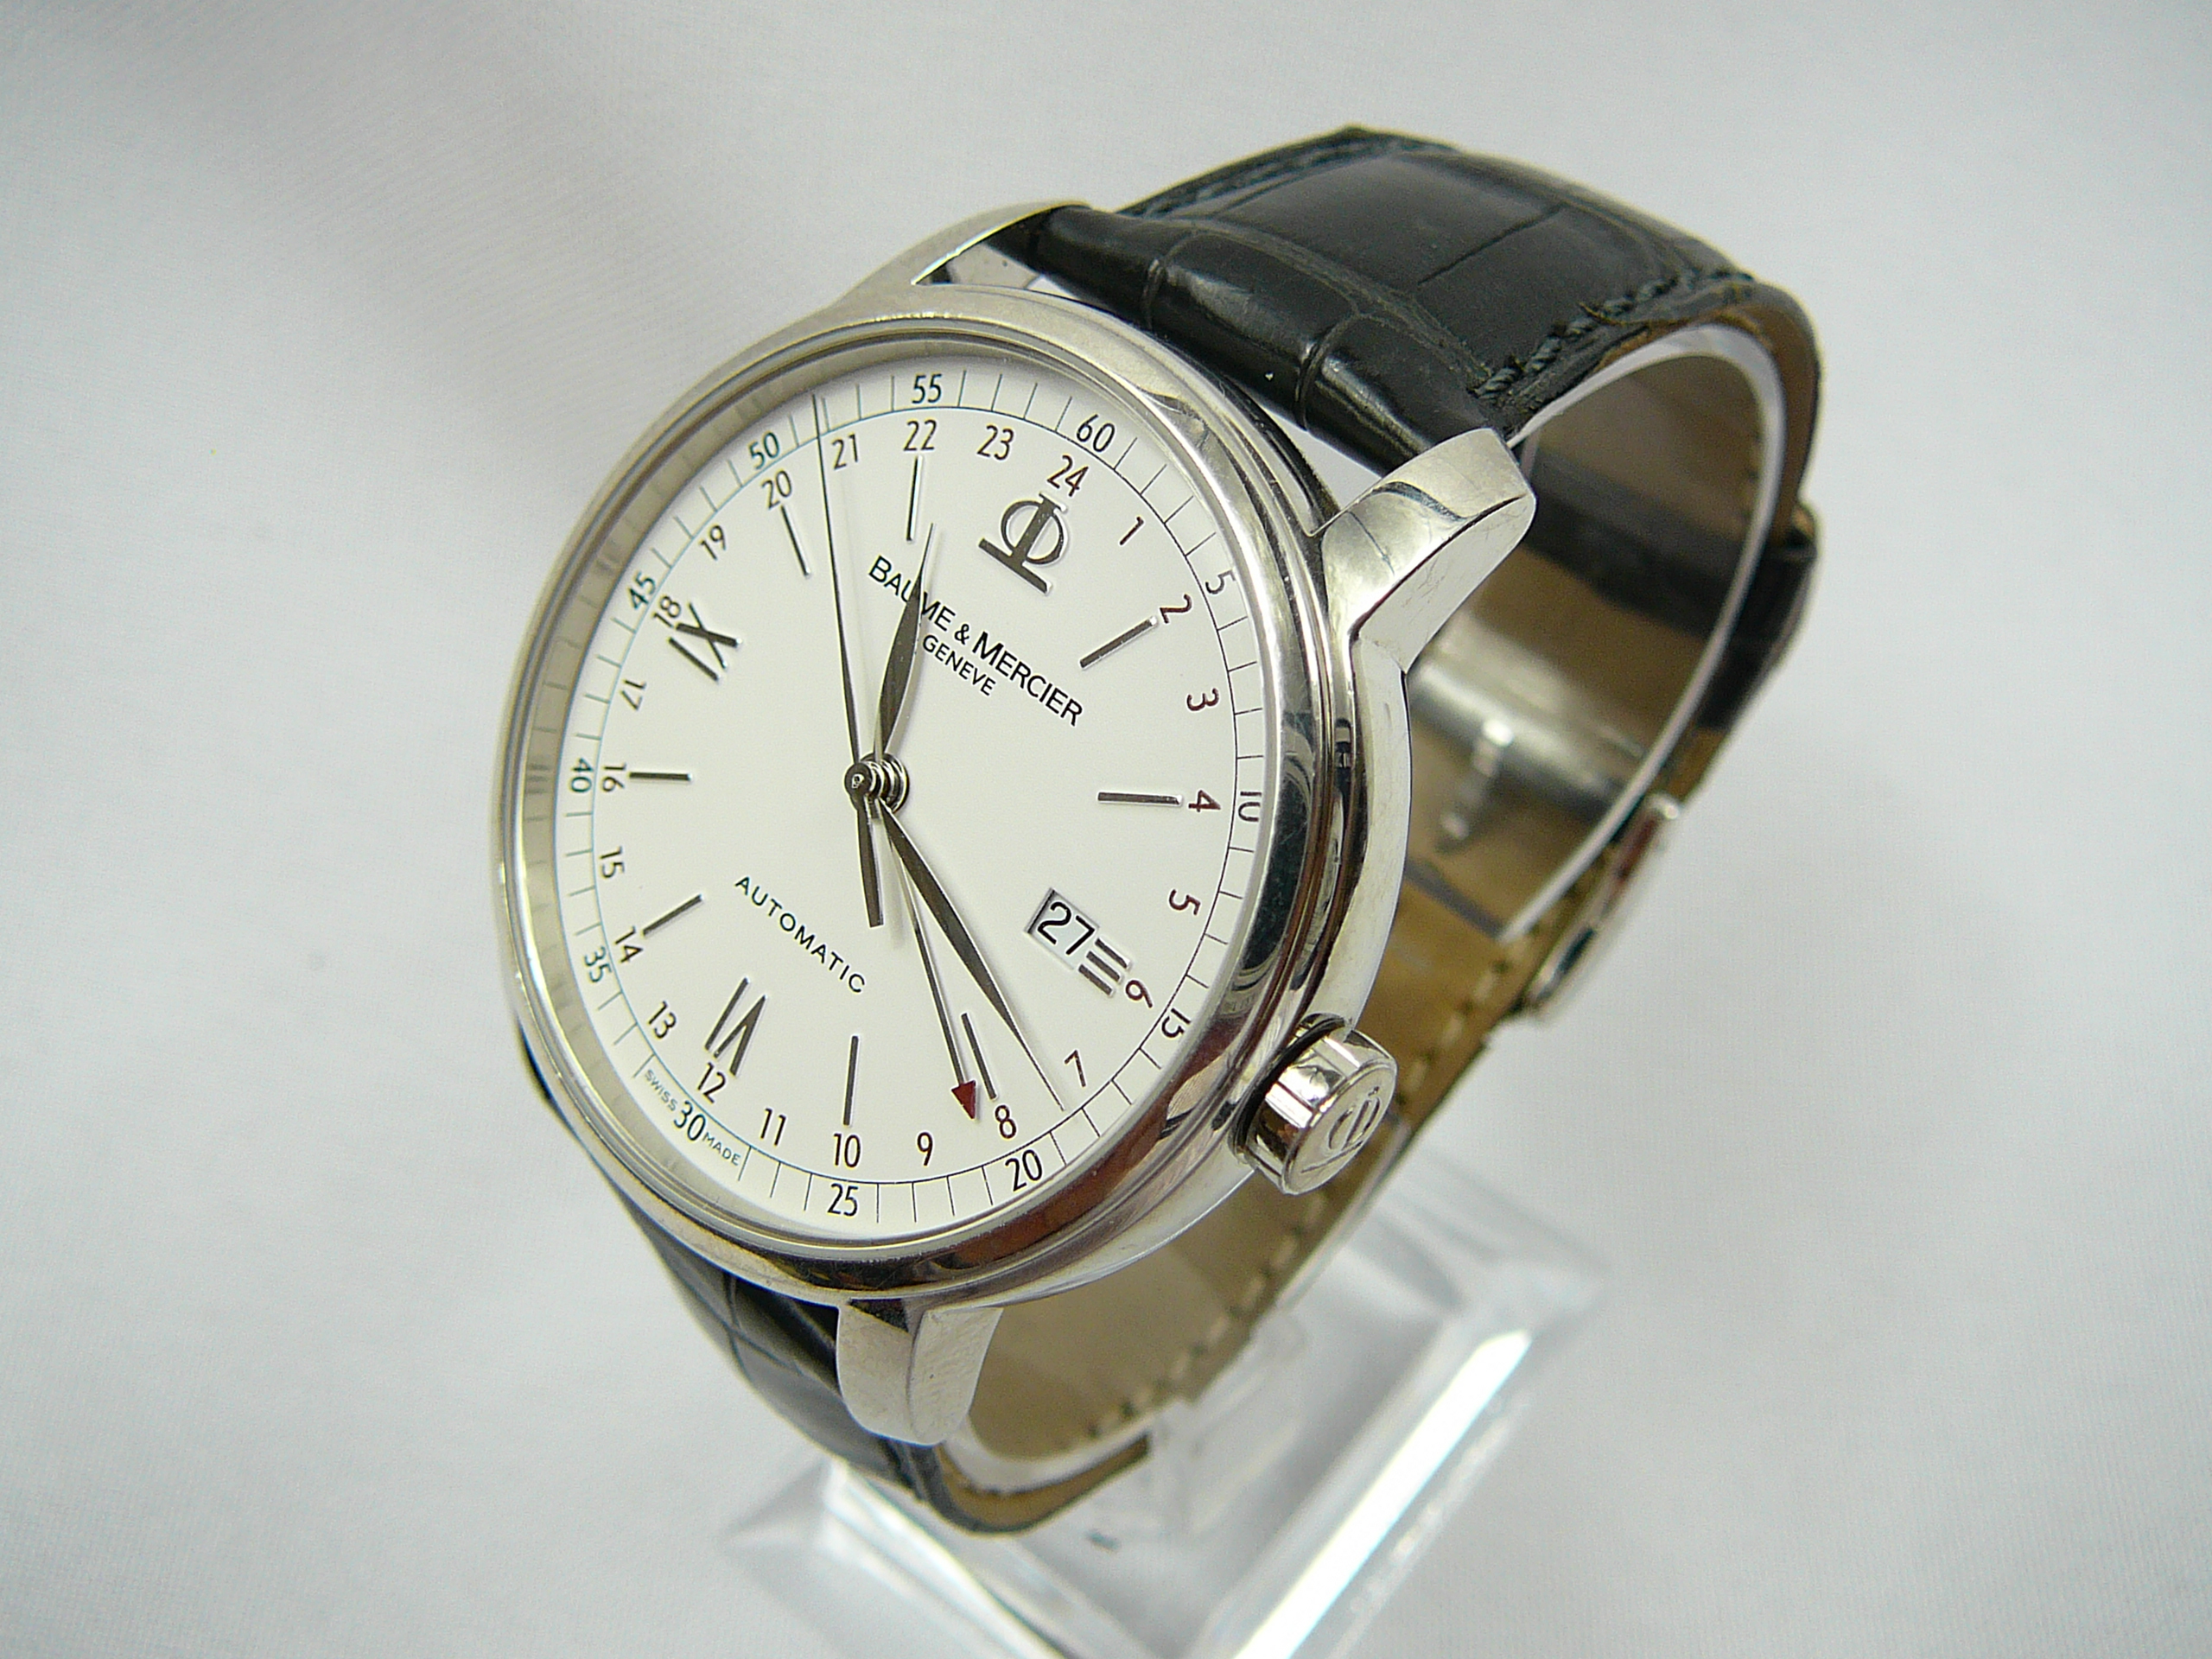 Gents Baume & Mercier wrist watch